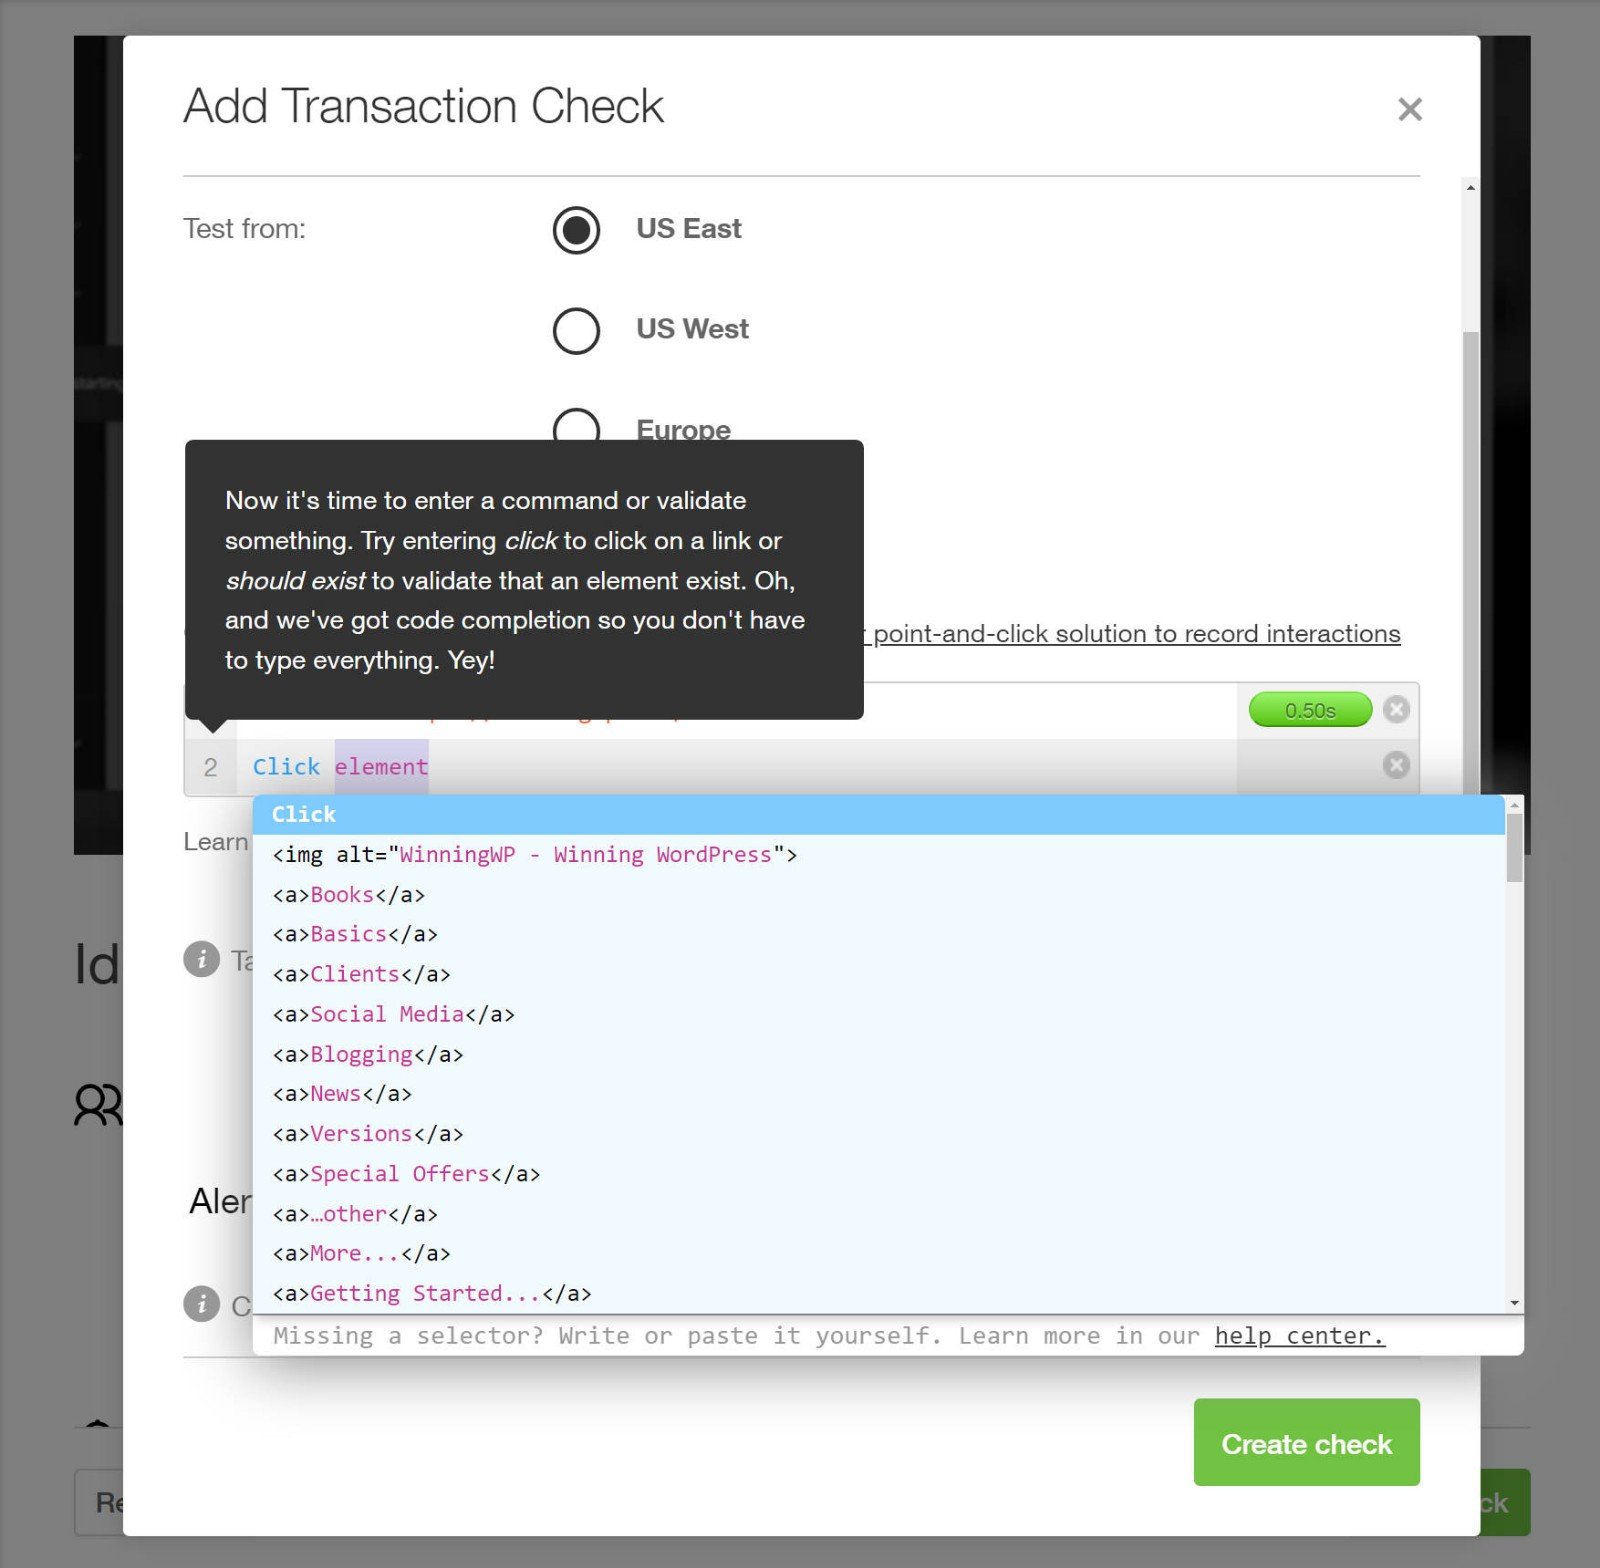 Pingdom's tool to create transaction checks